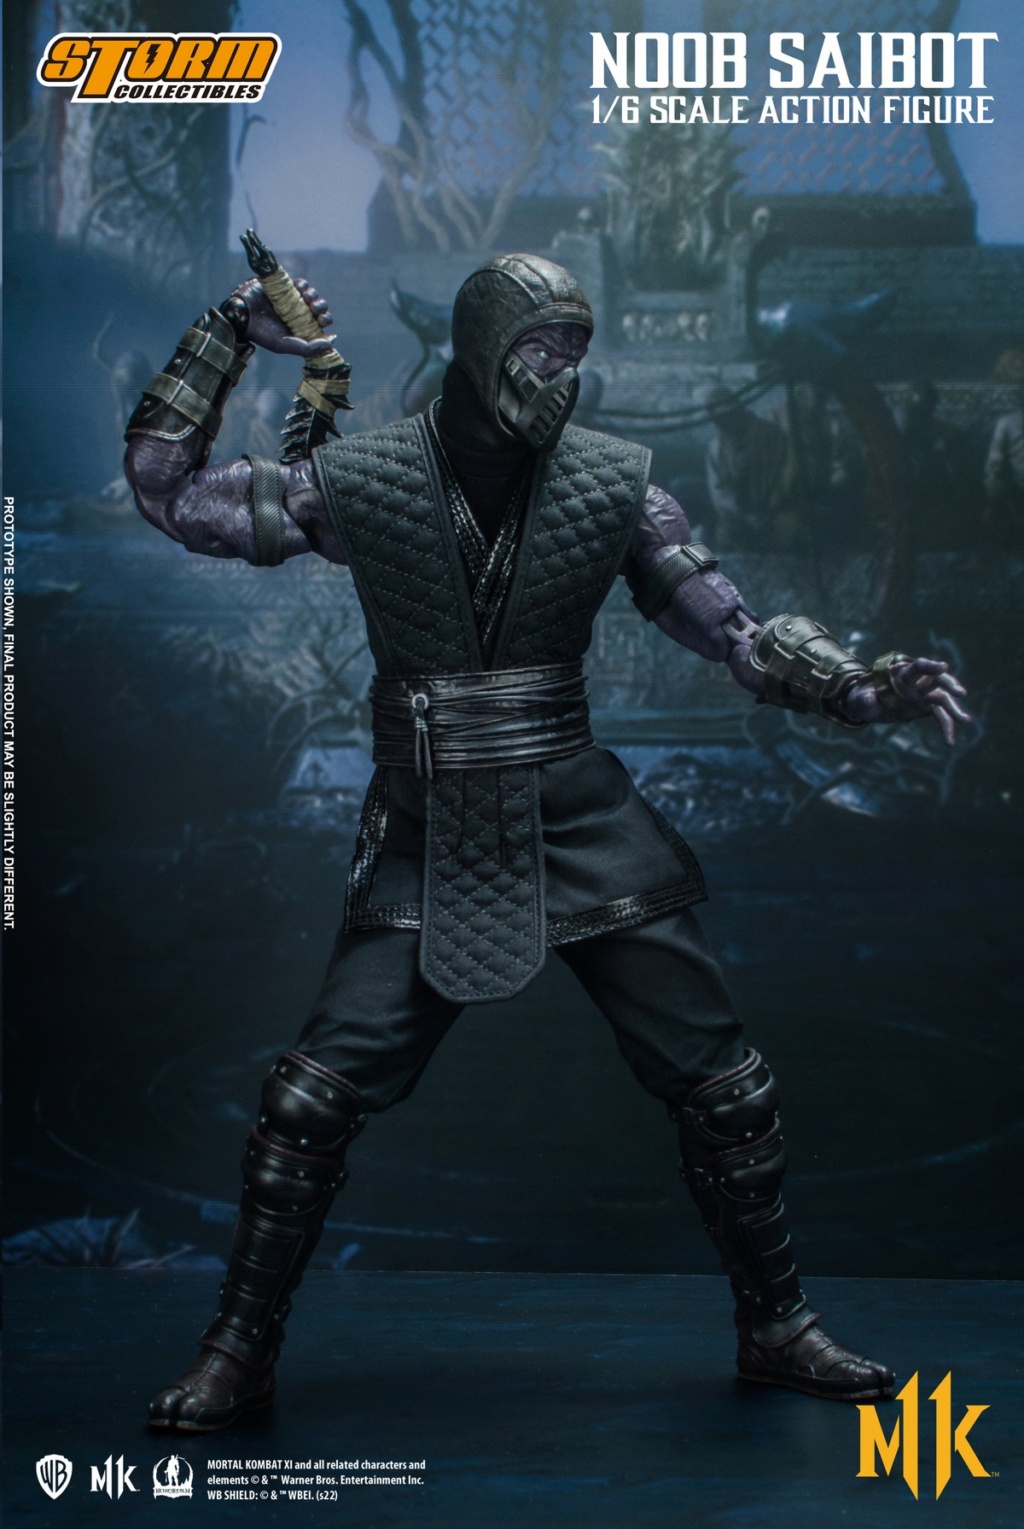 NEW PRODUCT: Storm Toys: 1/6 Mortal Kombat - NOOB SAIBOT Action Figure 11412111